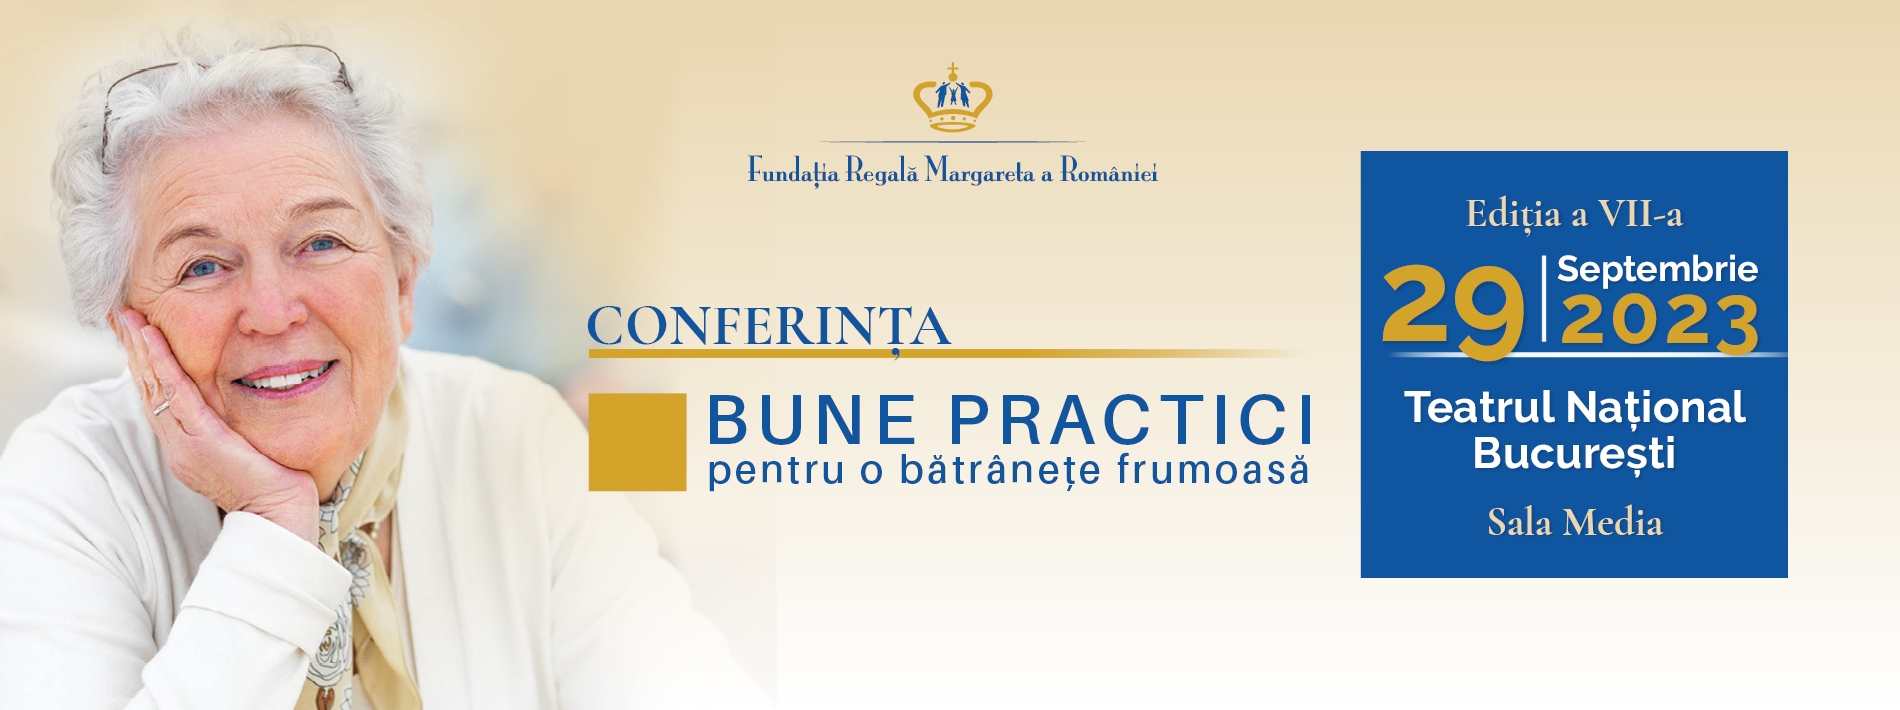 Banner site Conferinta Bune Practici 2023 1900 x 710 px